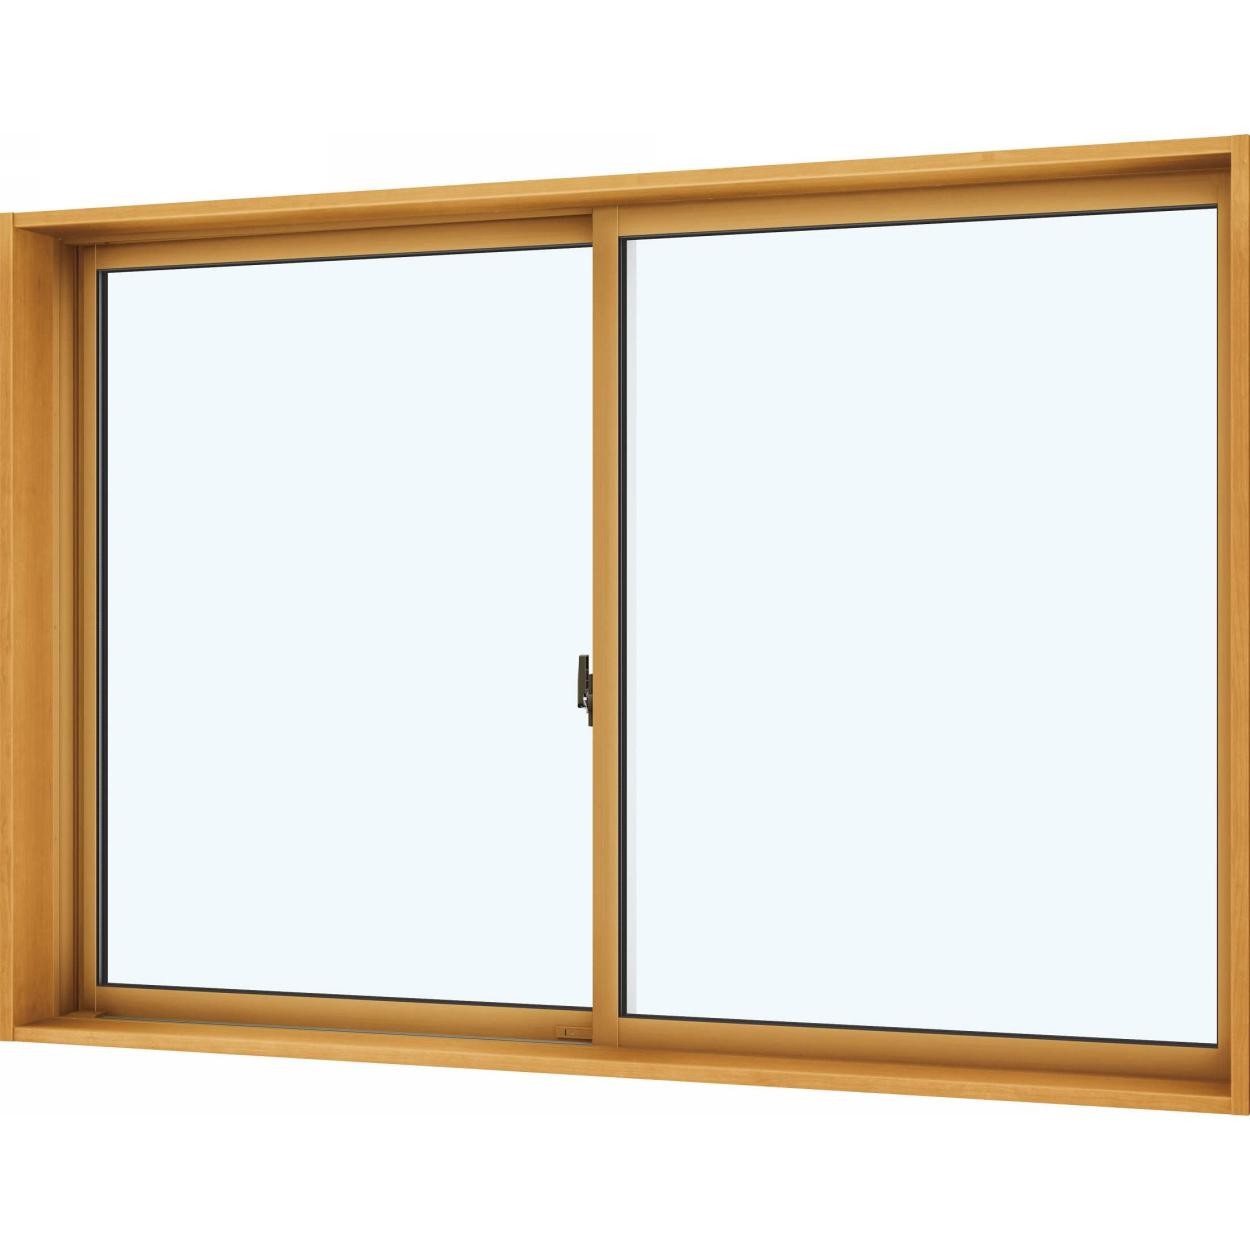 YKKAP窓サッシ 引き違い窓 エピソードNEO[複層ガラス] 2枚建 半外付型